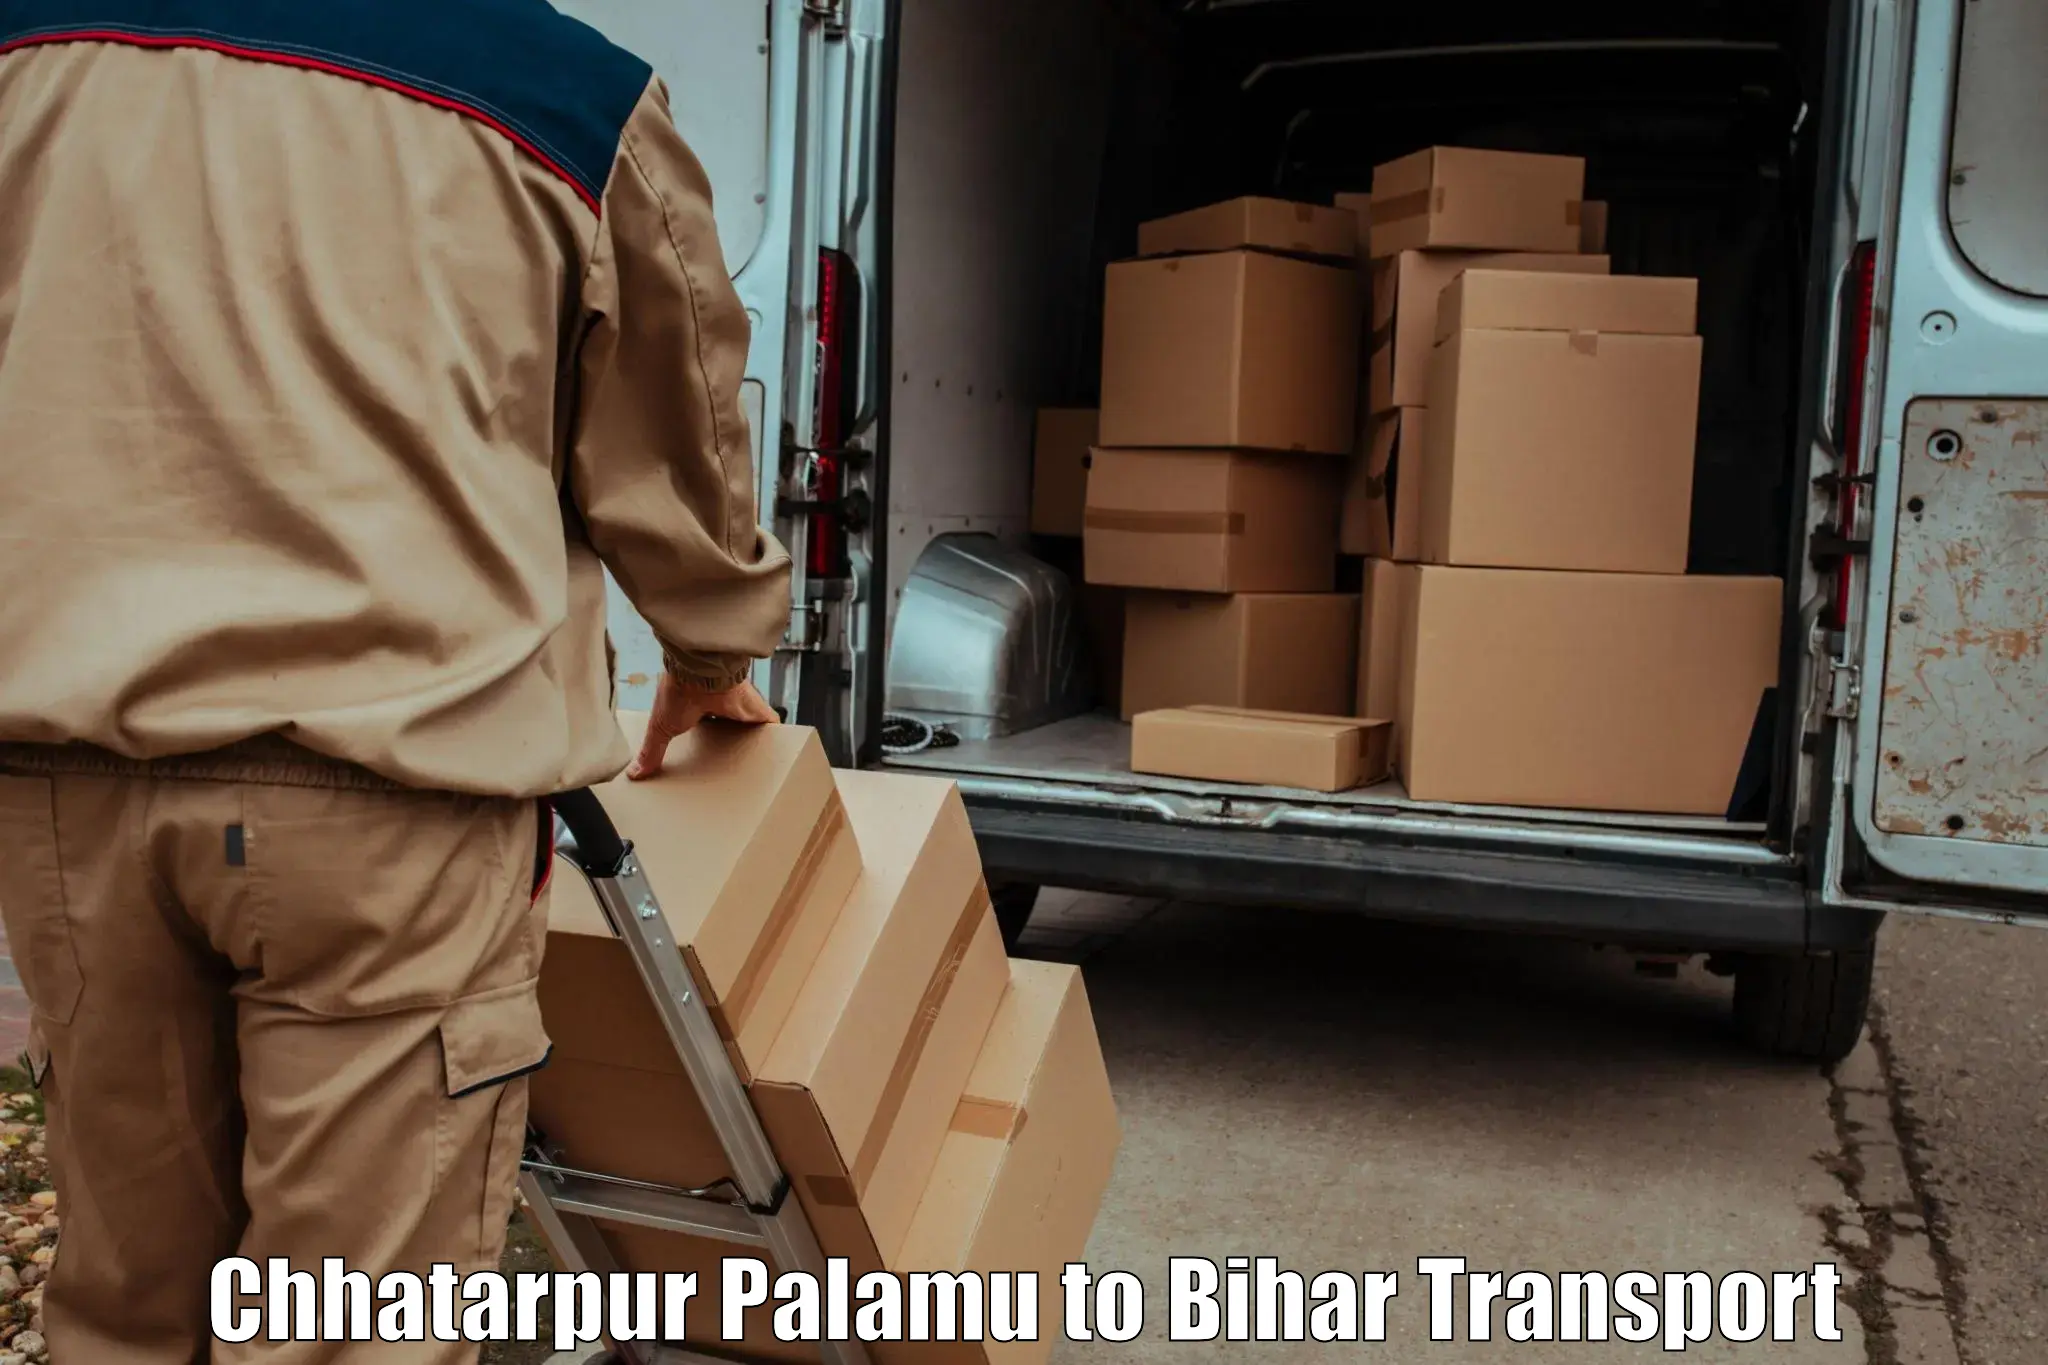 Goods delivery service Chhatarpur Palamu to Banka